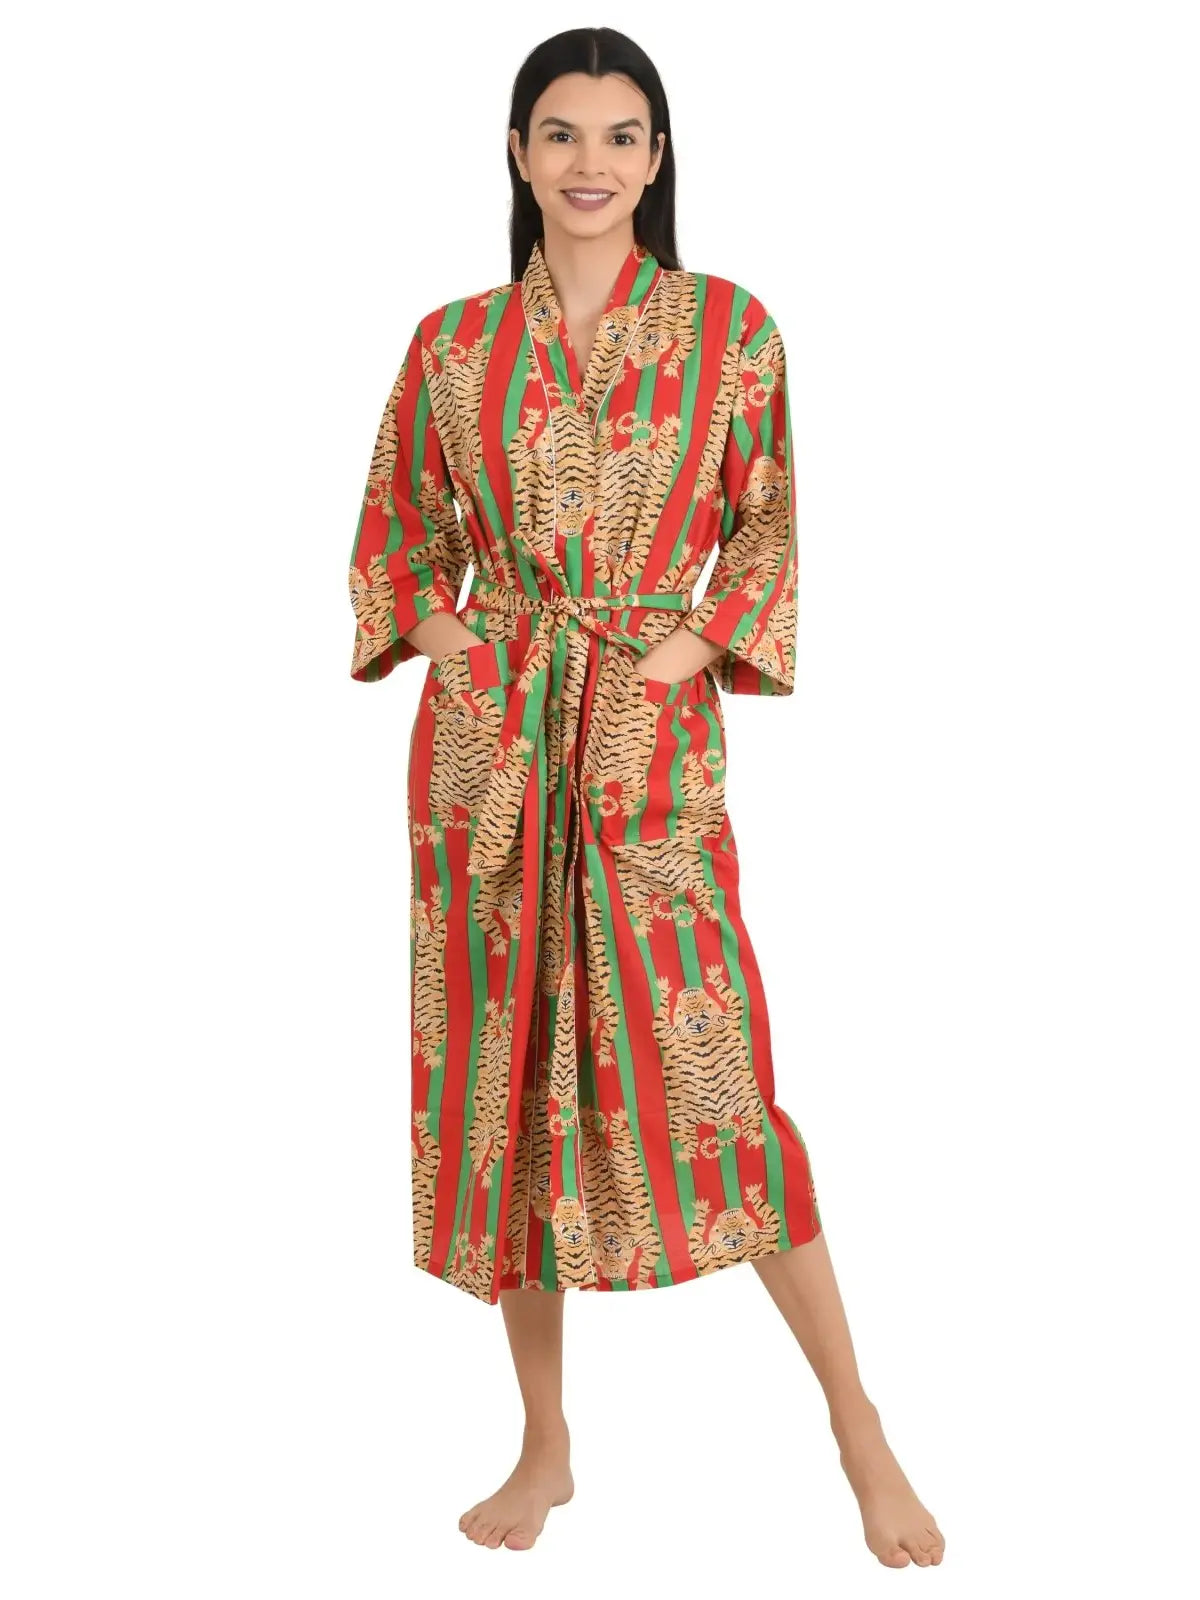 Kimono House Robe Indian Handprinted Strips Cheetah Print Pattern | Lightweight Summer Luxury Beach Holidays Yacht Cover Up Stunning Dress